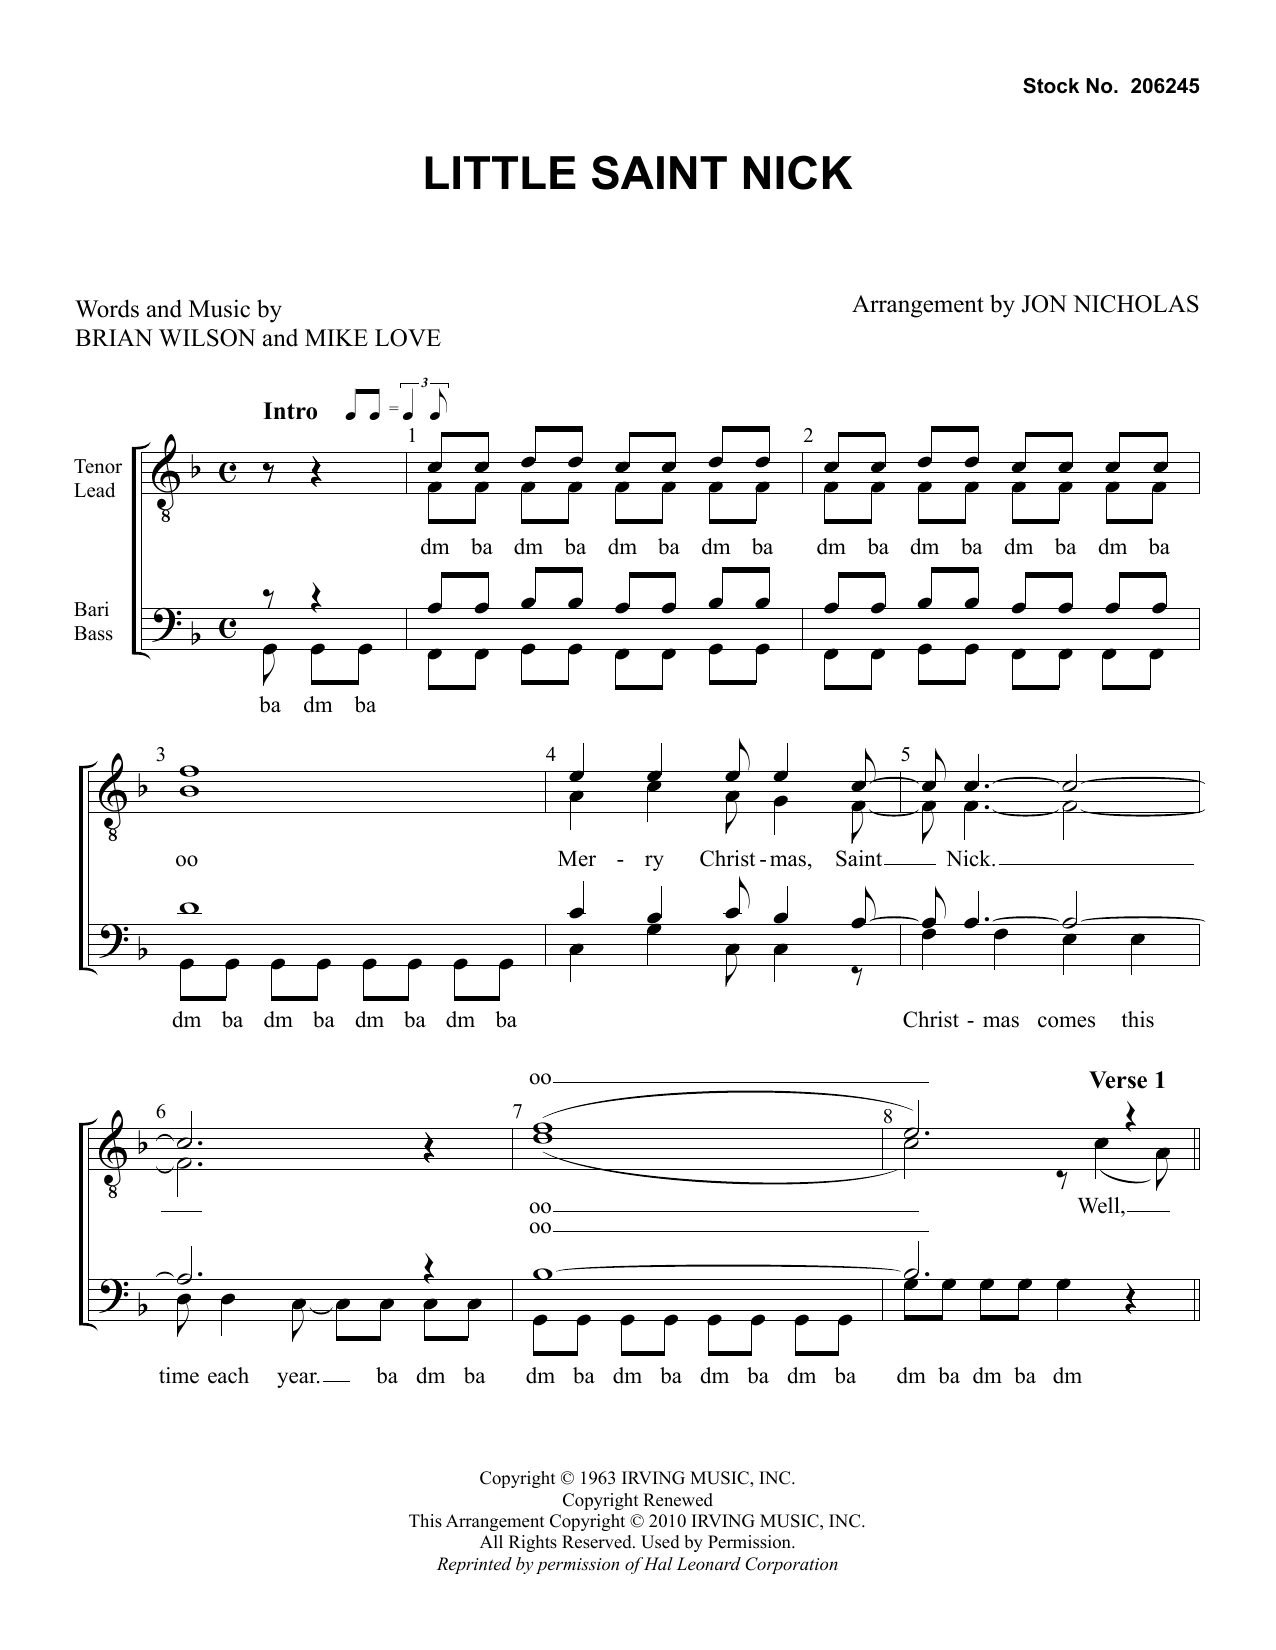 The Beach Boys Little Saint Nick (arr. Jon Nicholas) Sheet Music Notes & Chords for SSAA - Download or Print PDF